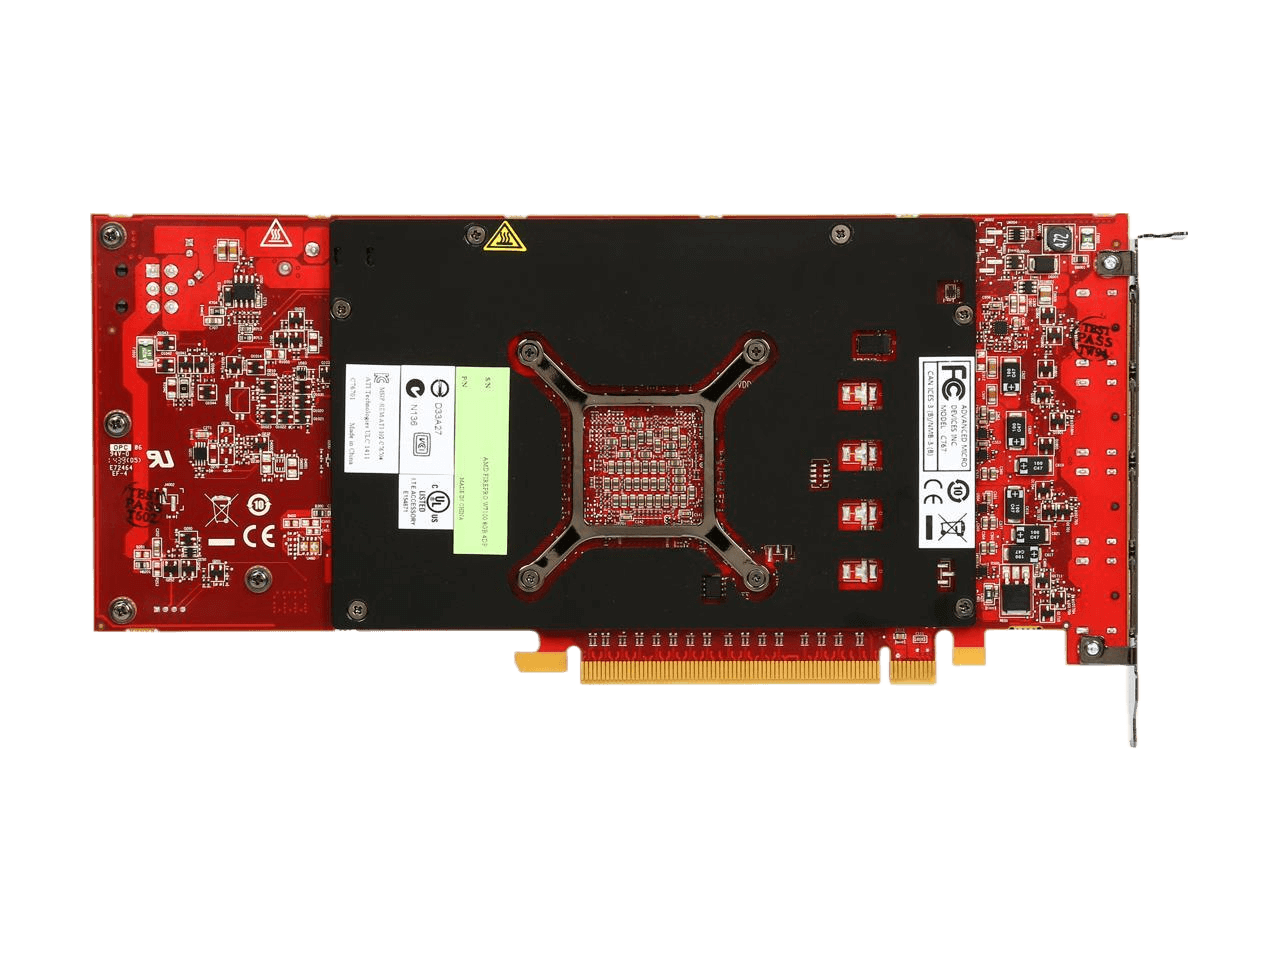 AMD FirePro W7100 8GB GDDR5 256-Bit PCI Express 3.0 x16 Full Height Workstation Video Card